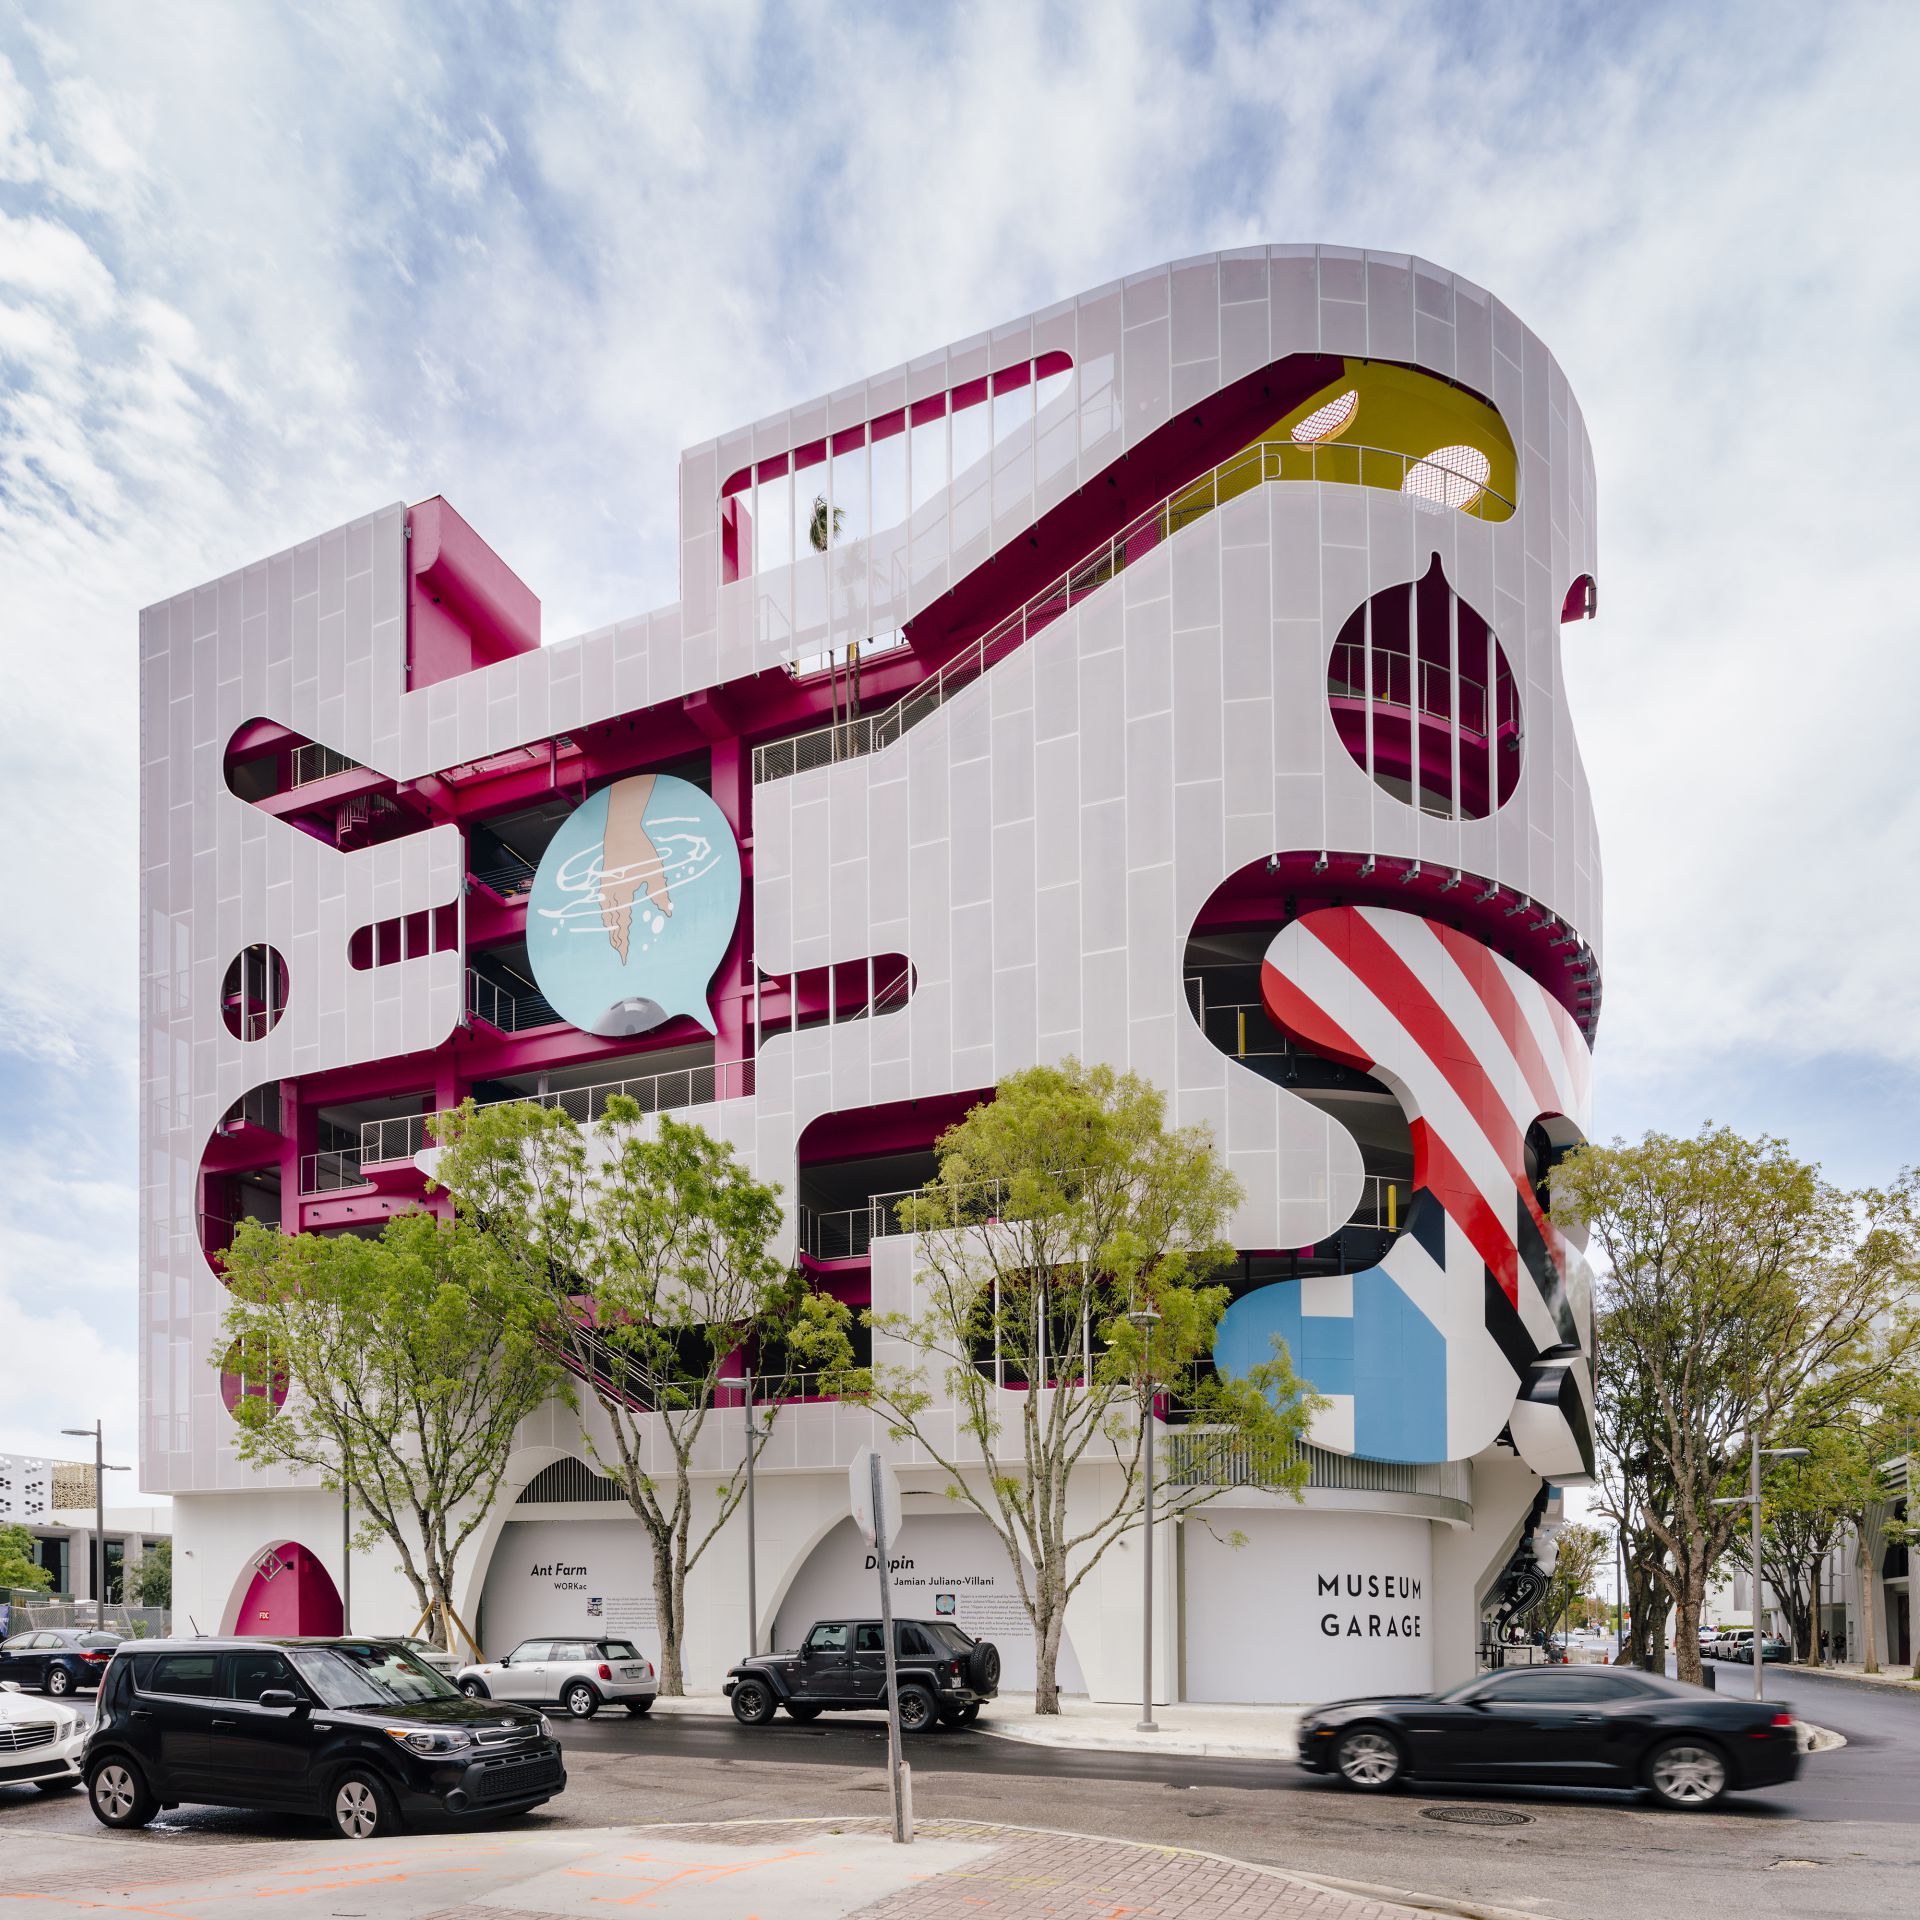 Miami parking facility Museum Garage combines several exterior designs